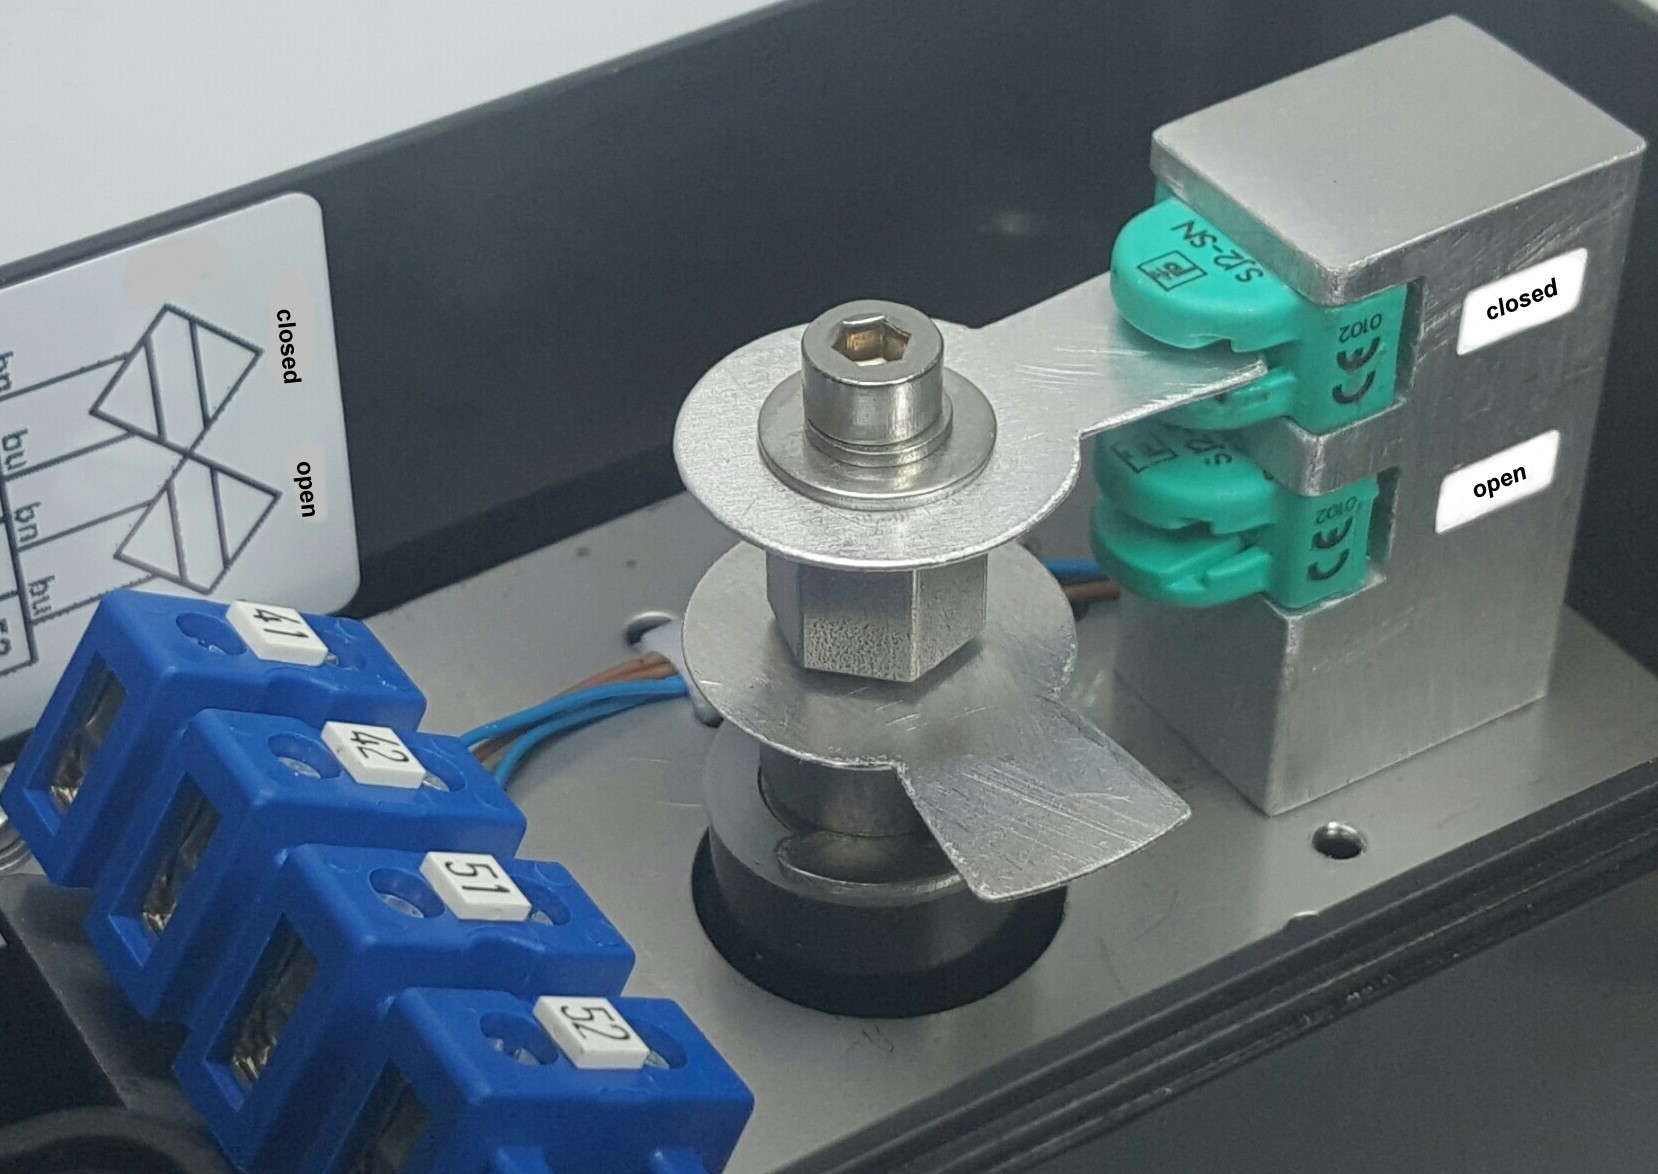 Ex i ... 8 V DC valve position indicator for valve automation